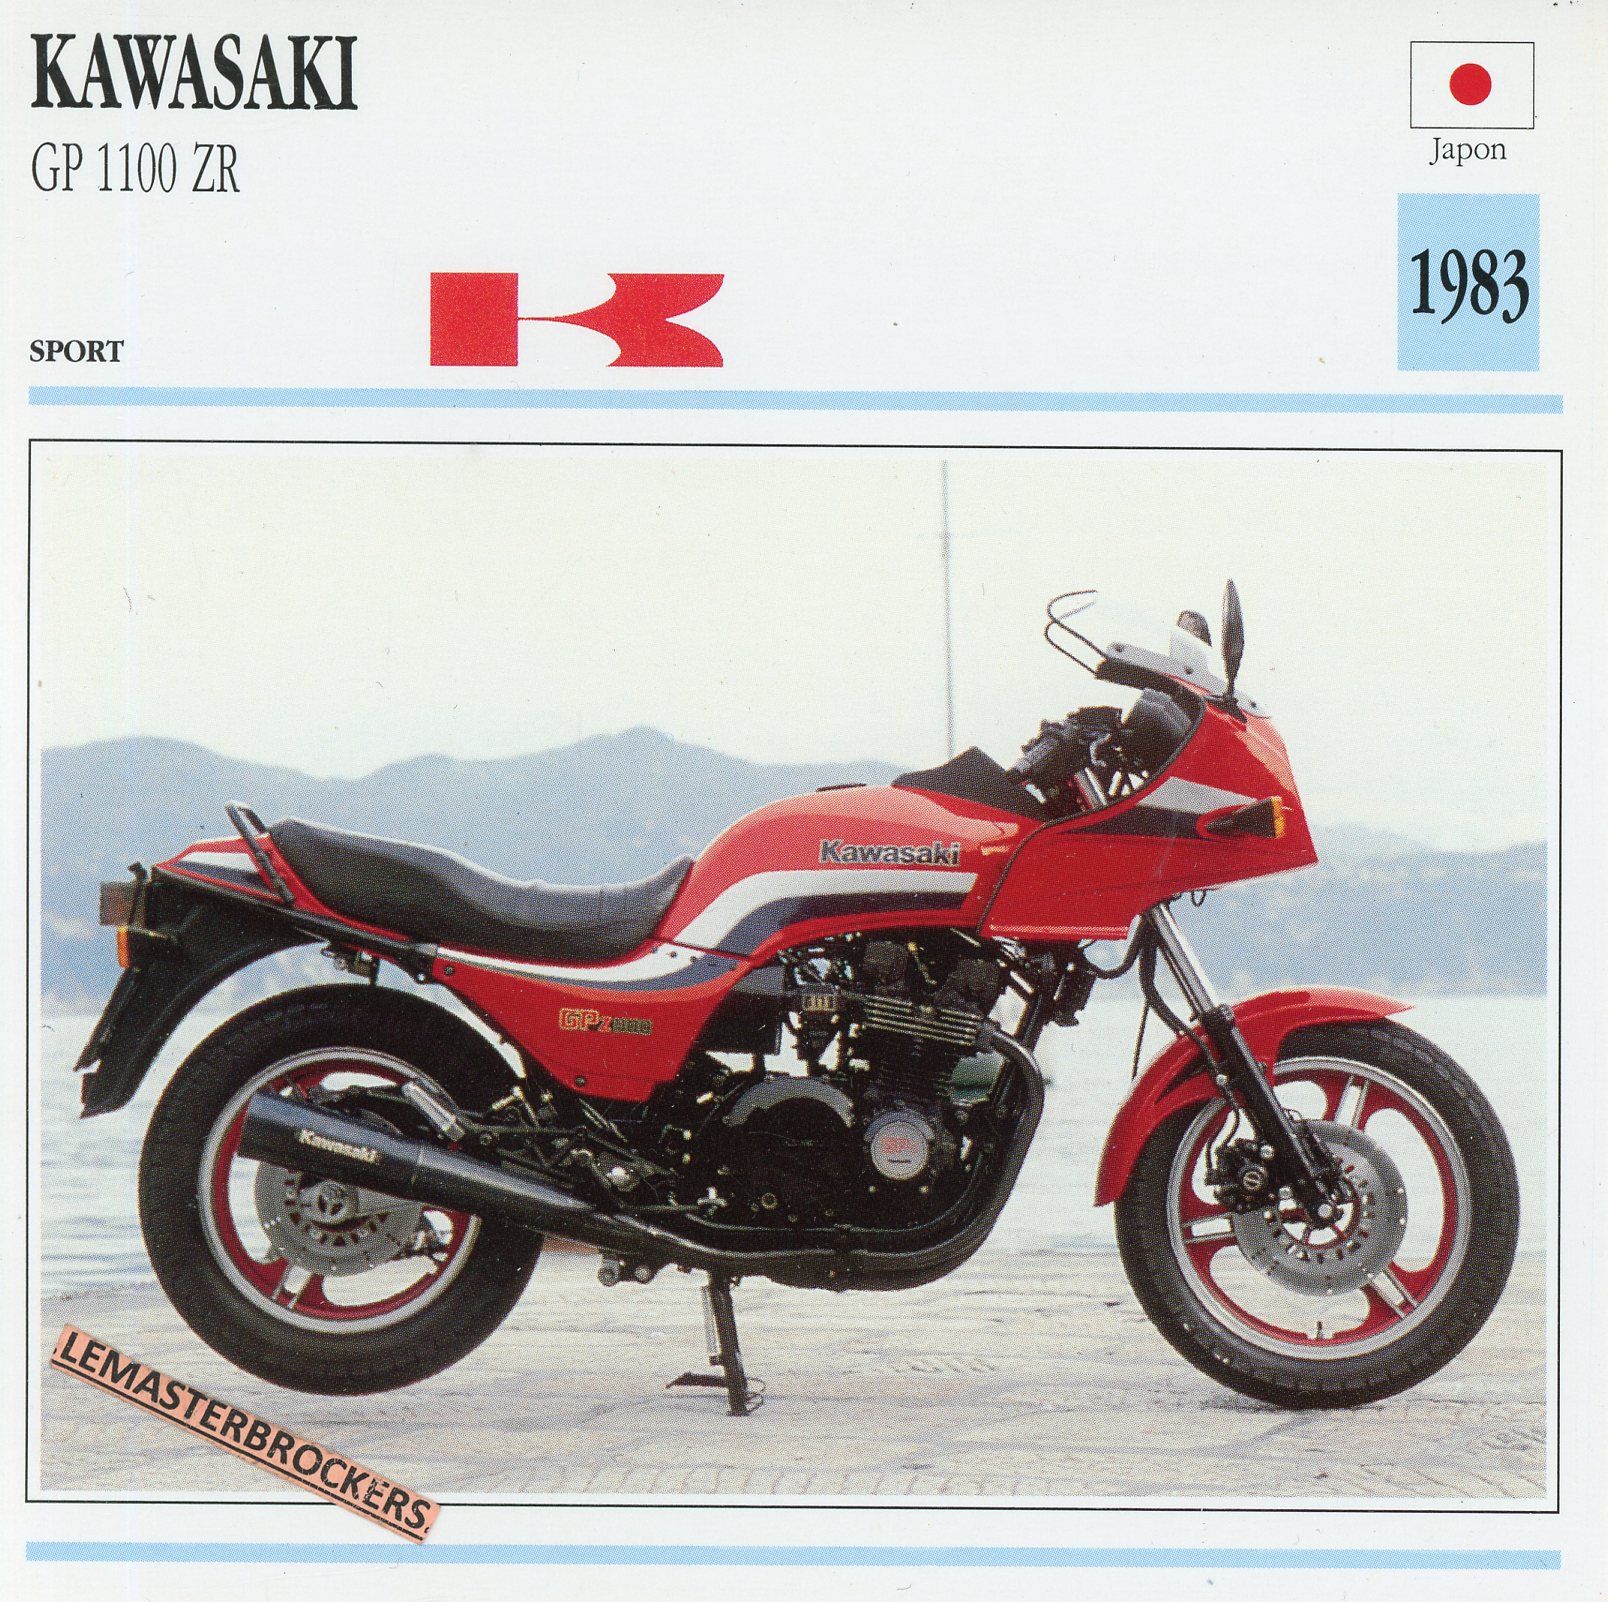 KAWASAKI-GP1100ZR-1983-FICHE-MOTO-KAWASAKI-1100-LEMASTERBROCKERS